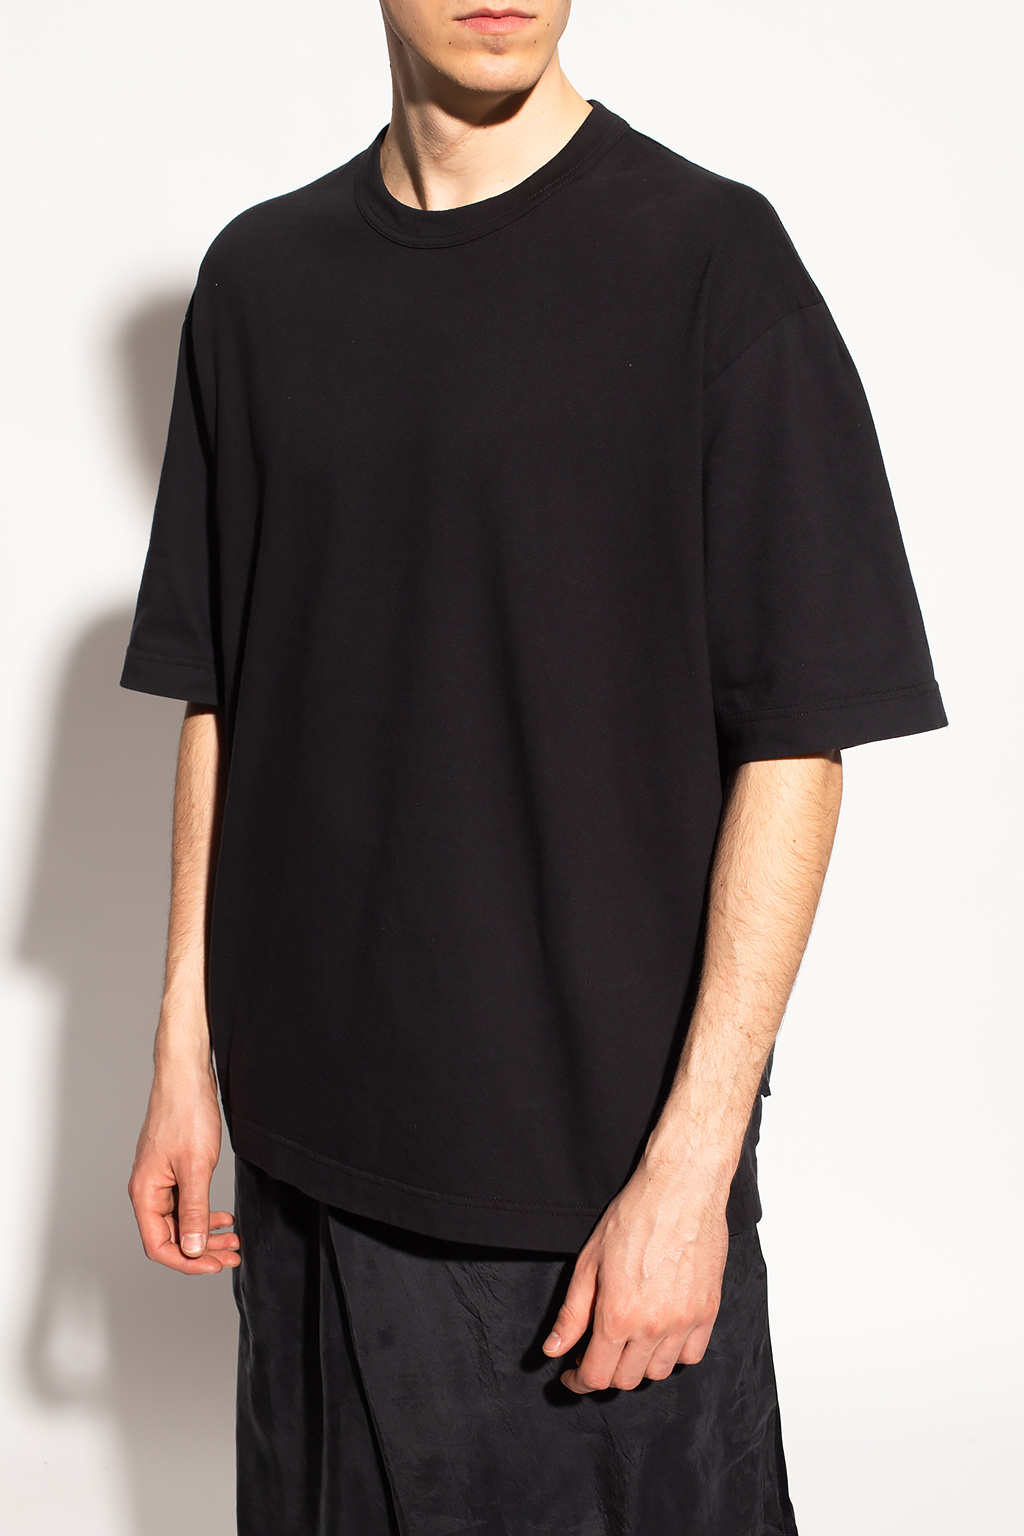 Black Oversize T-shirt with logo Y-3 Yohji Yamamoto - Vitkac Canada